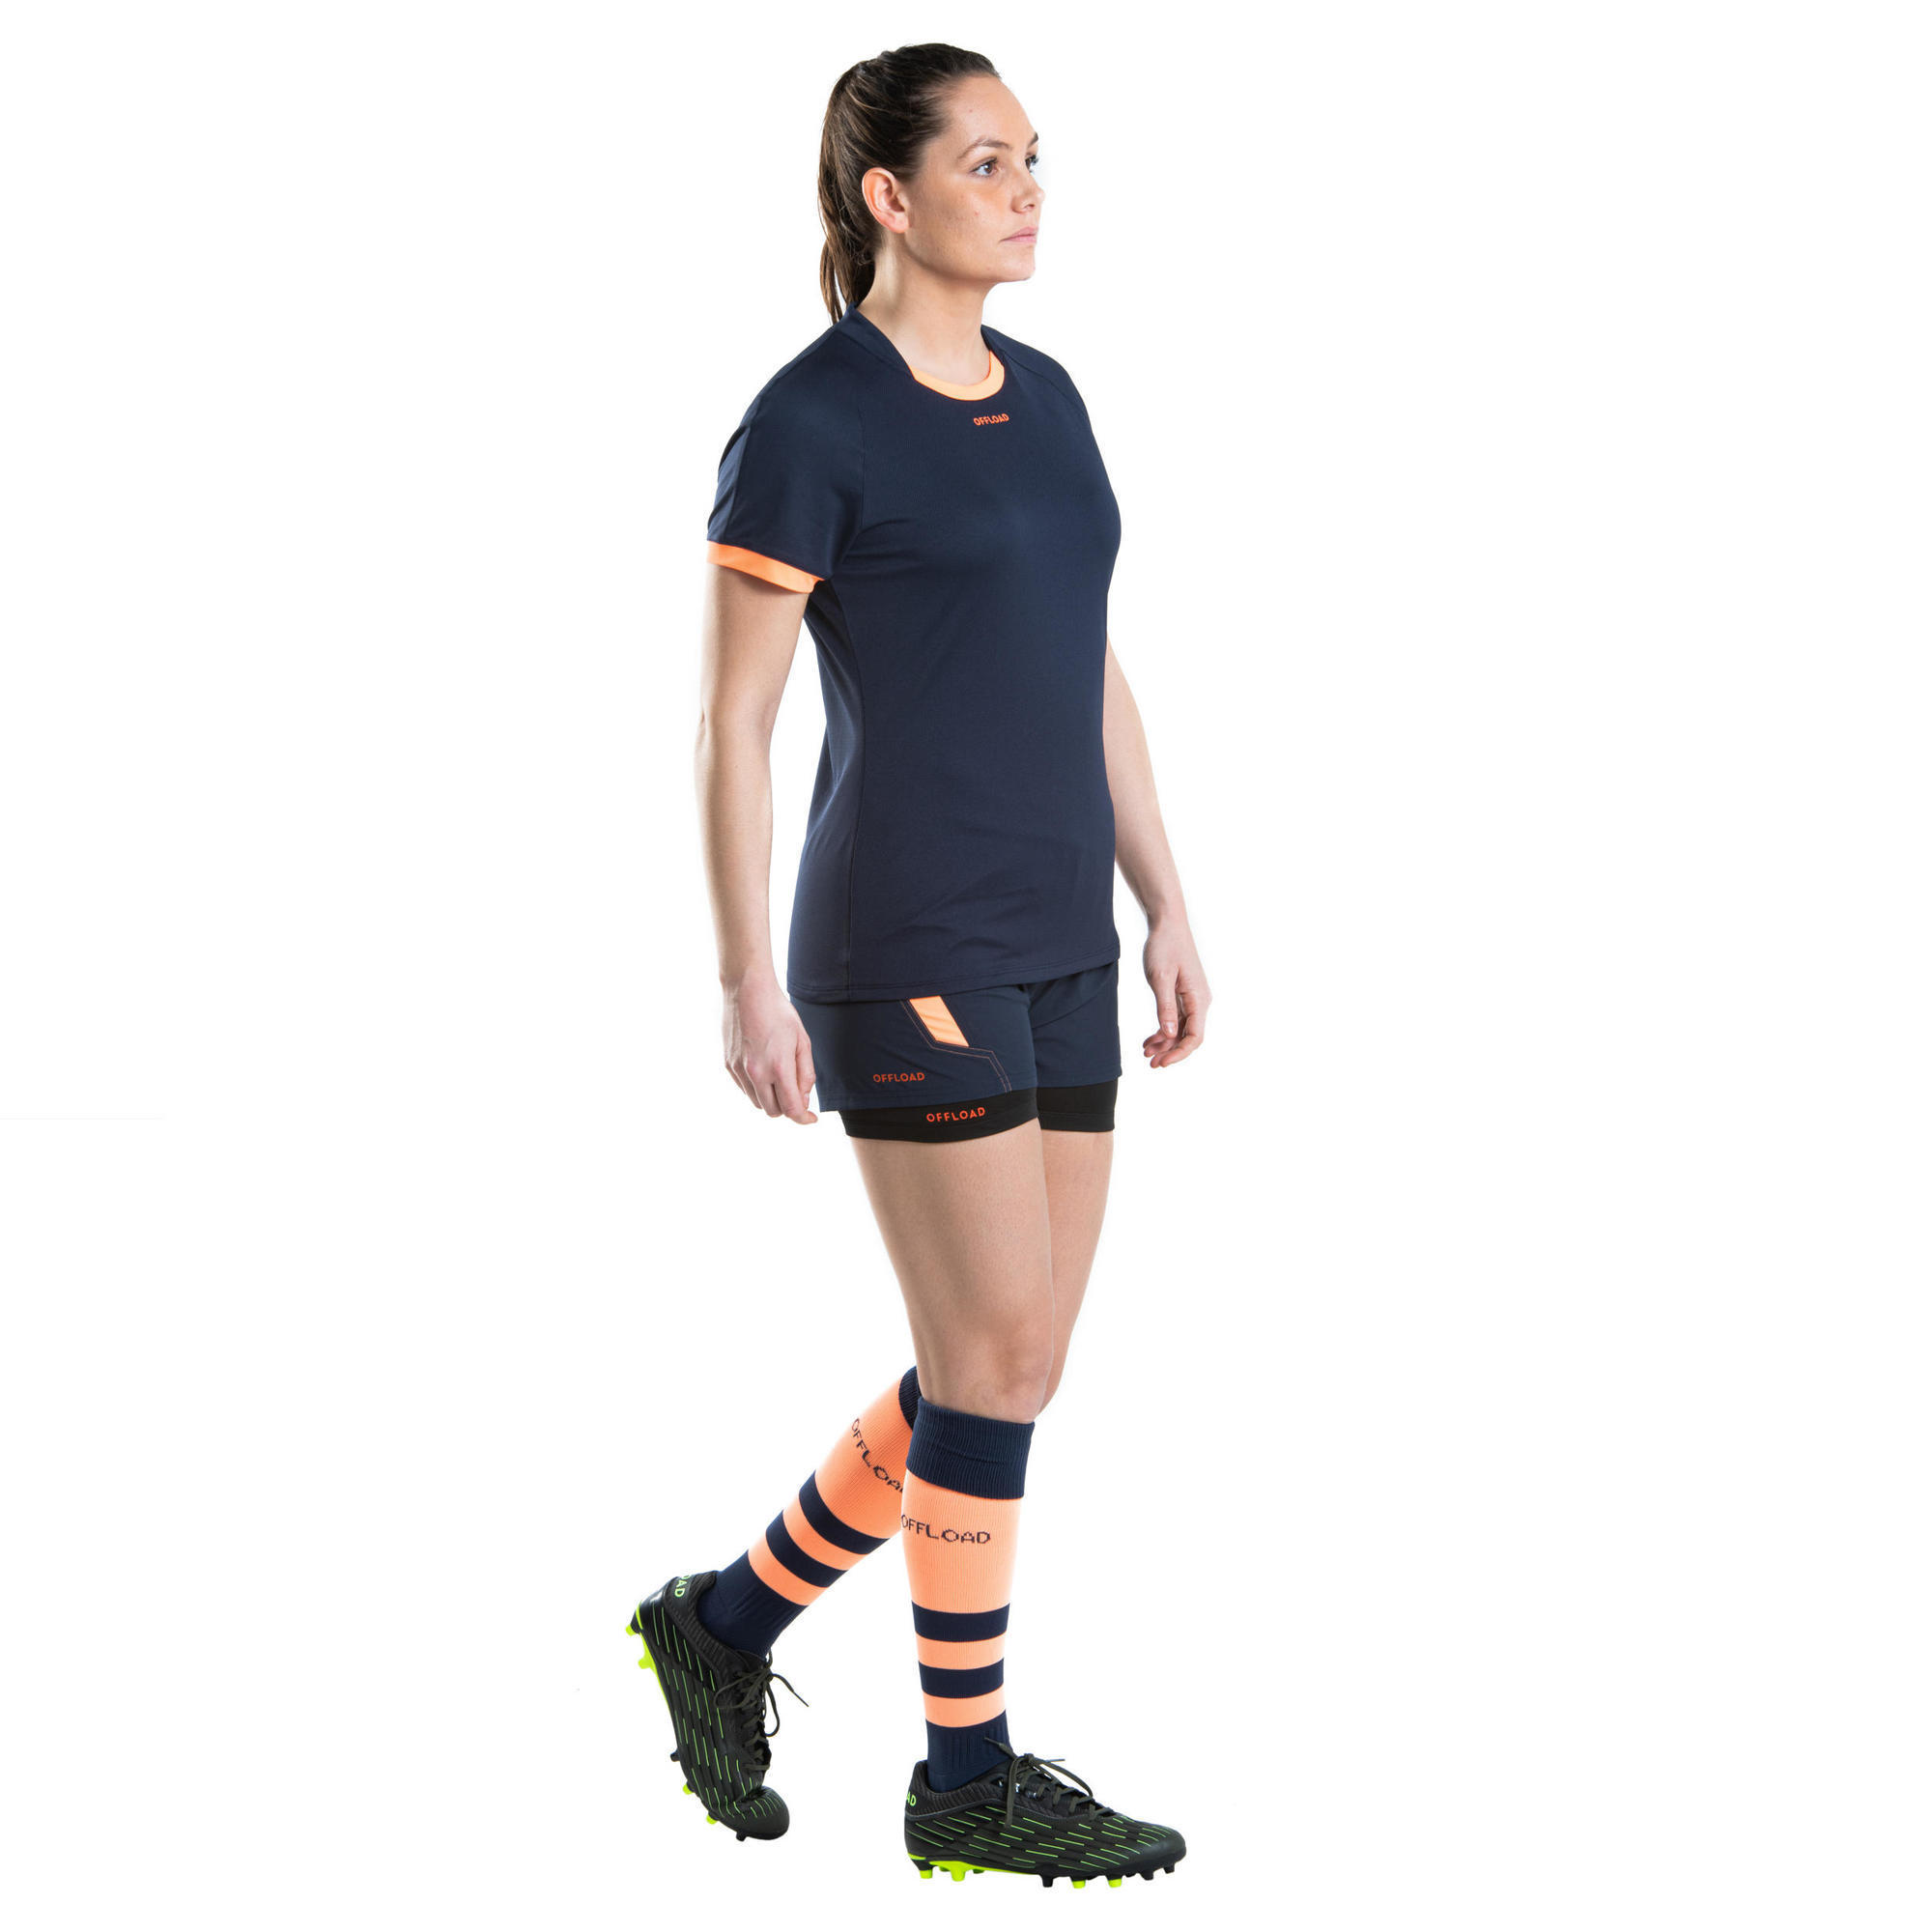 women's rugby under shorts